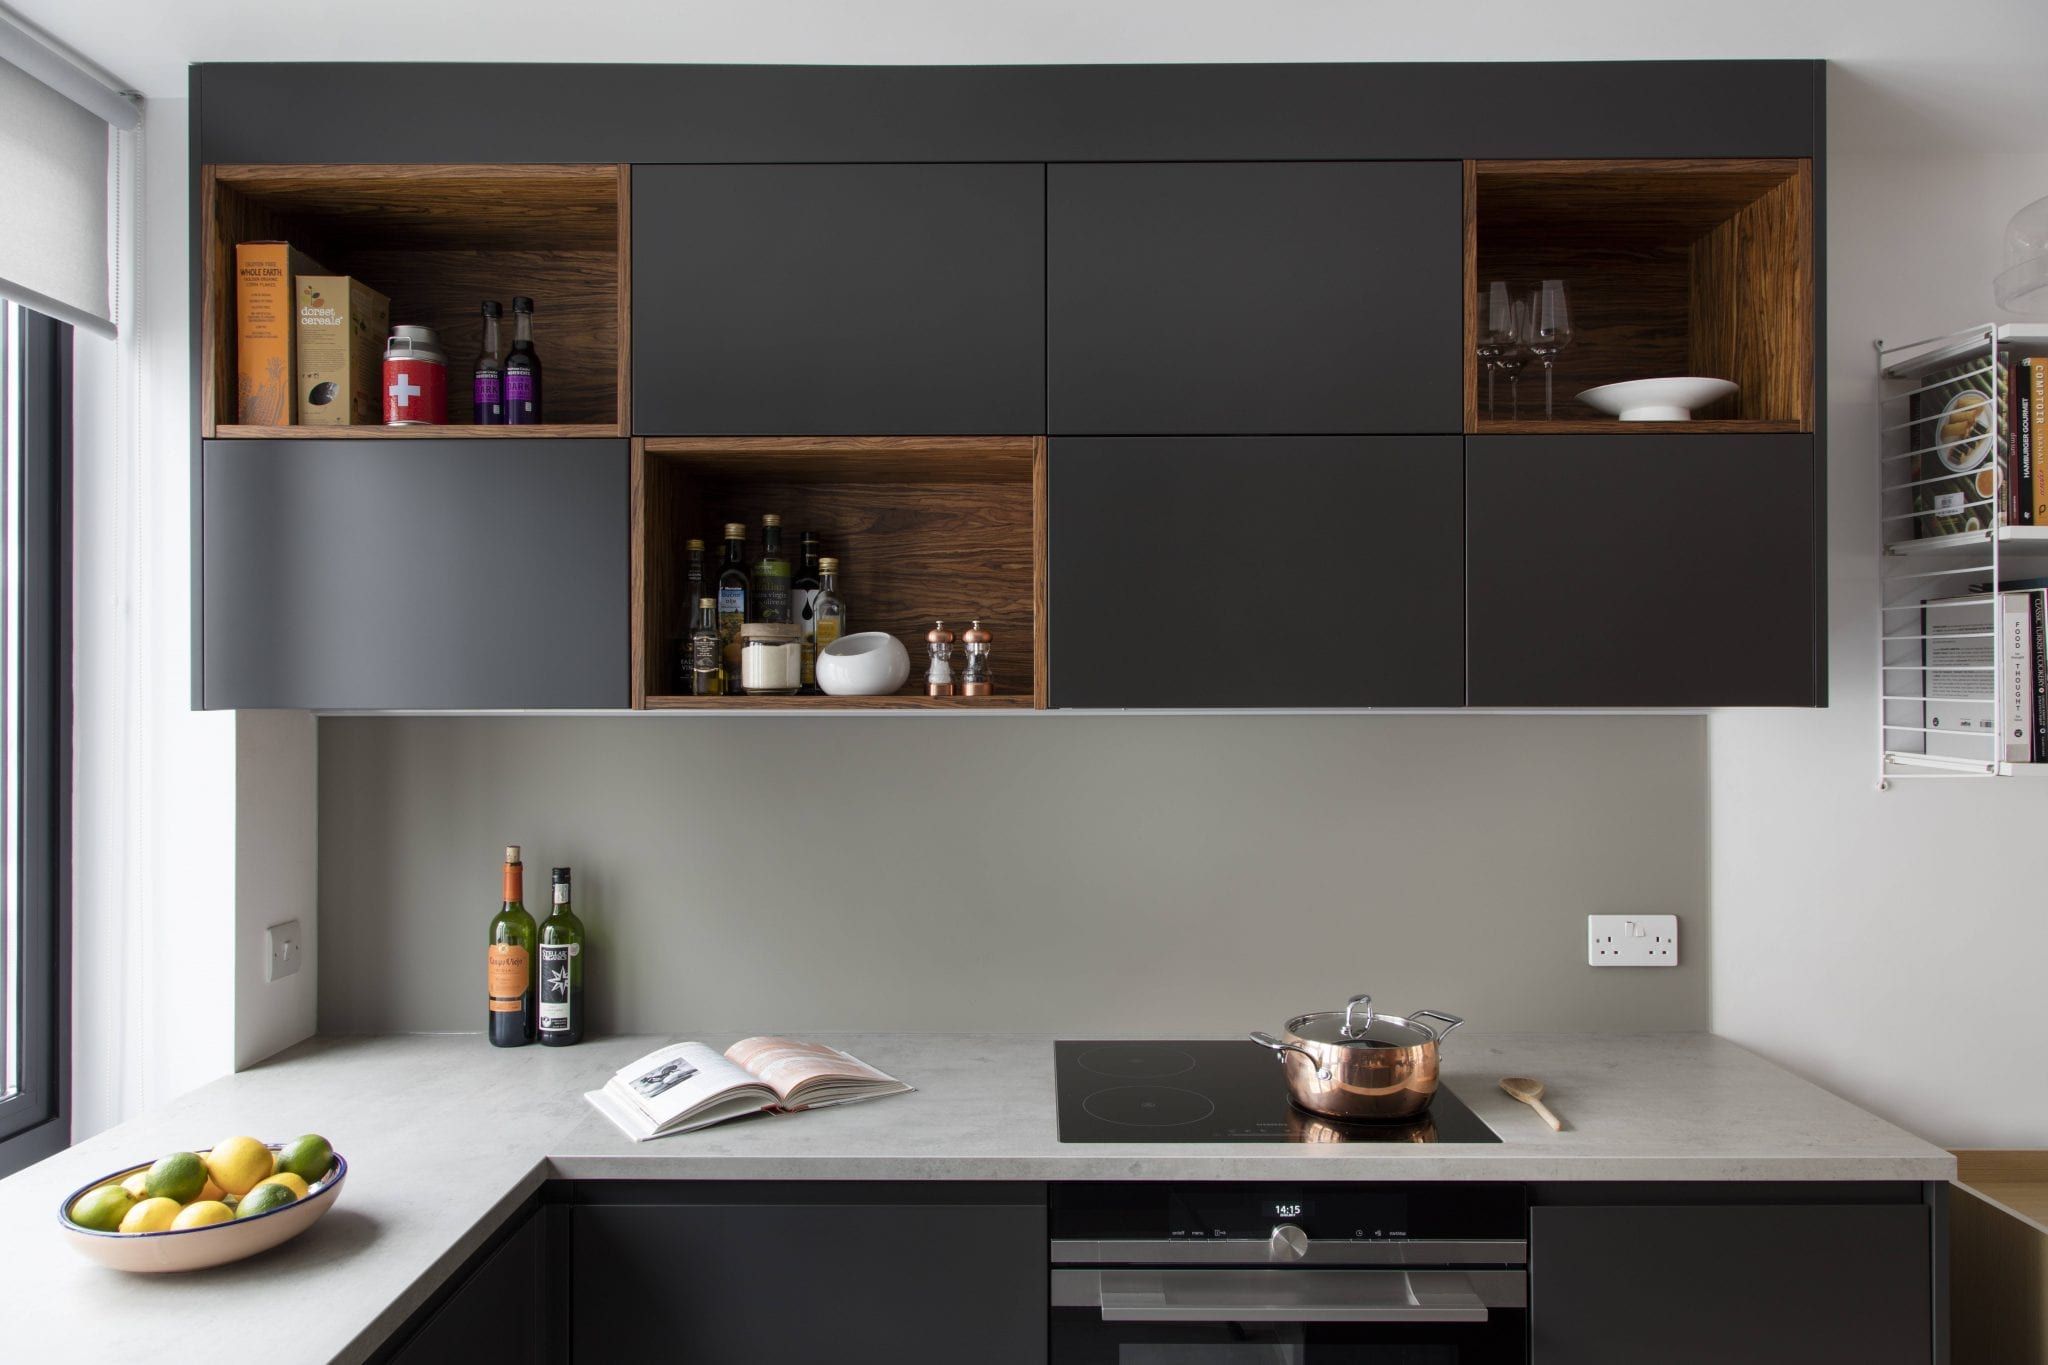 Charcoal grey - Scandinavian kitchen cabinets